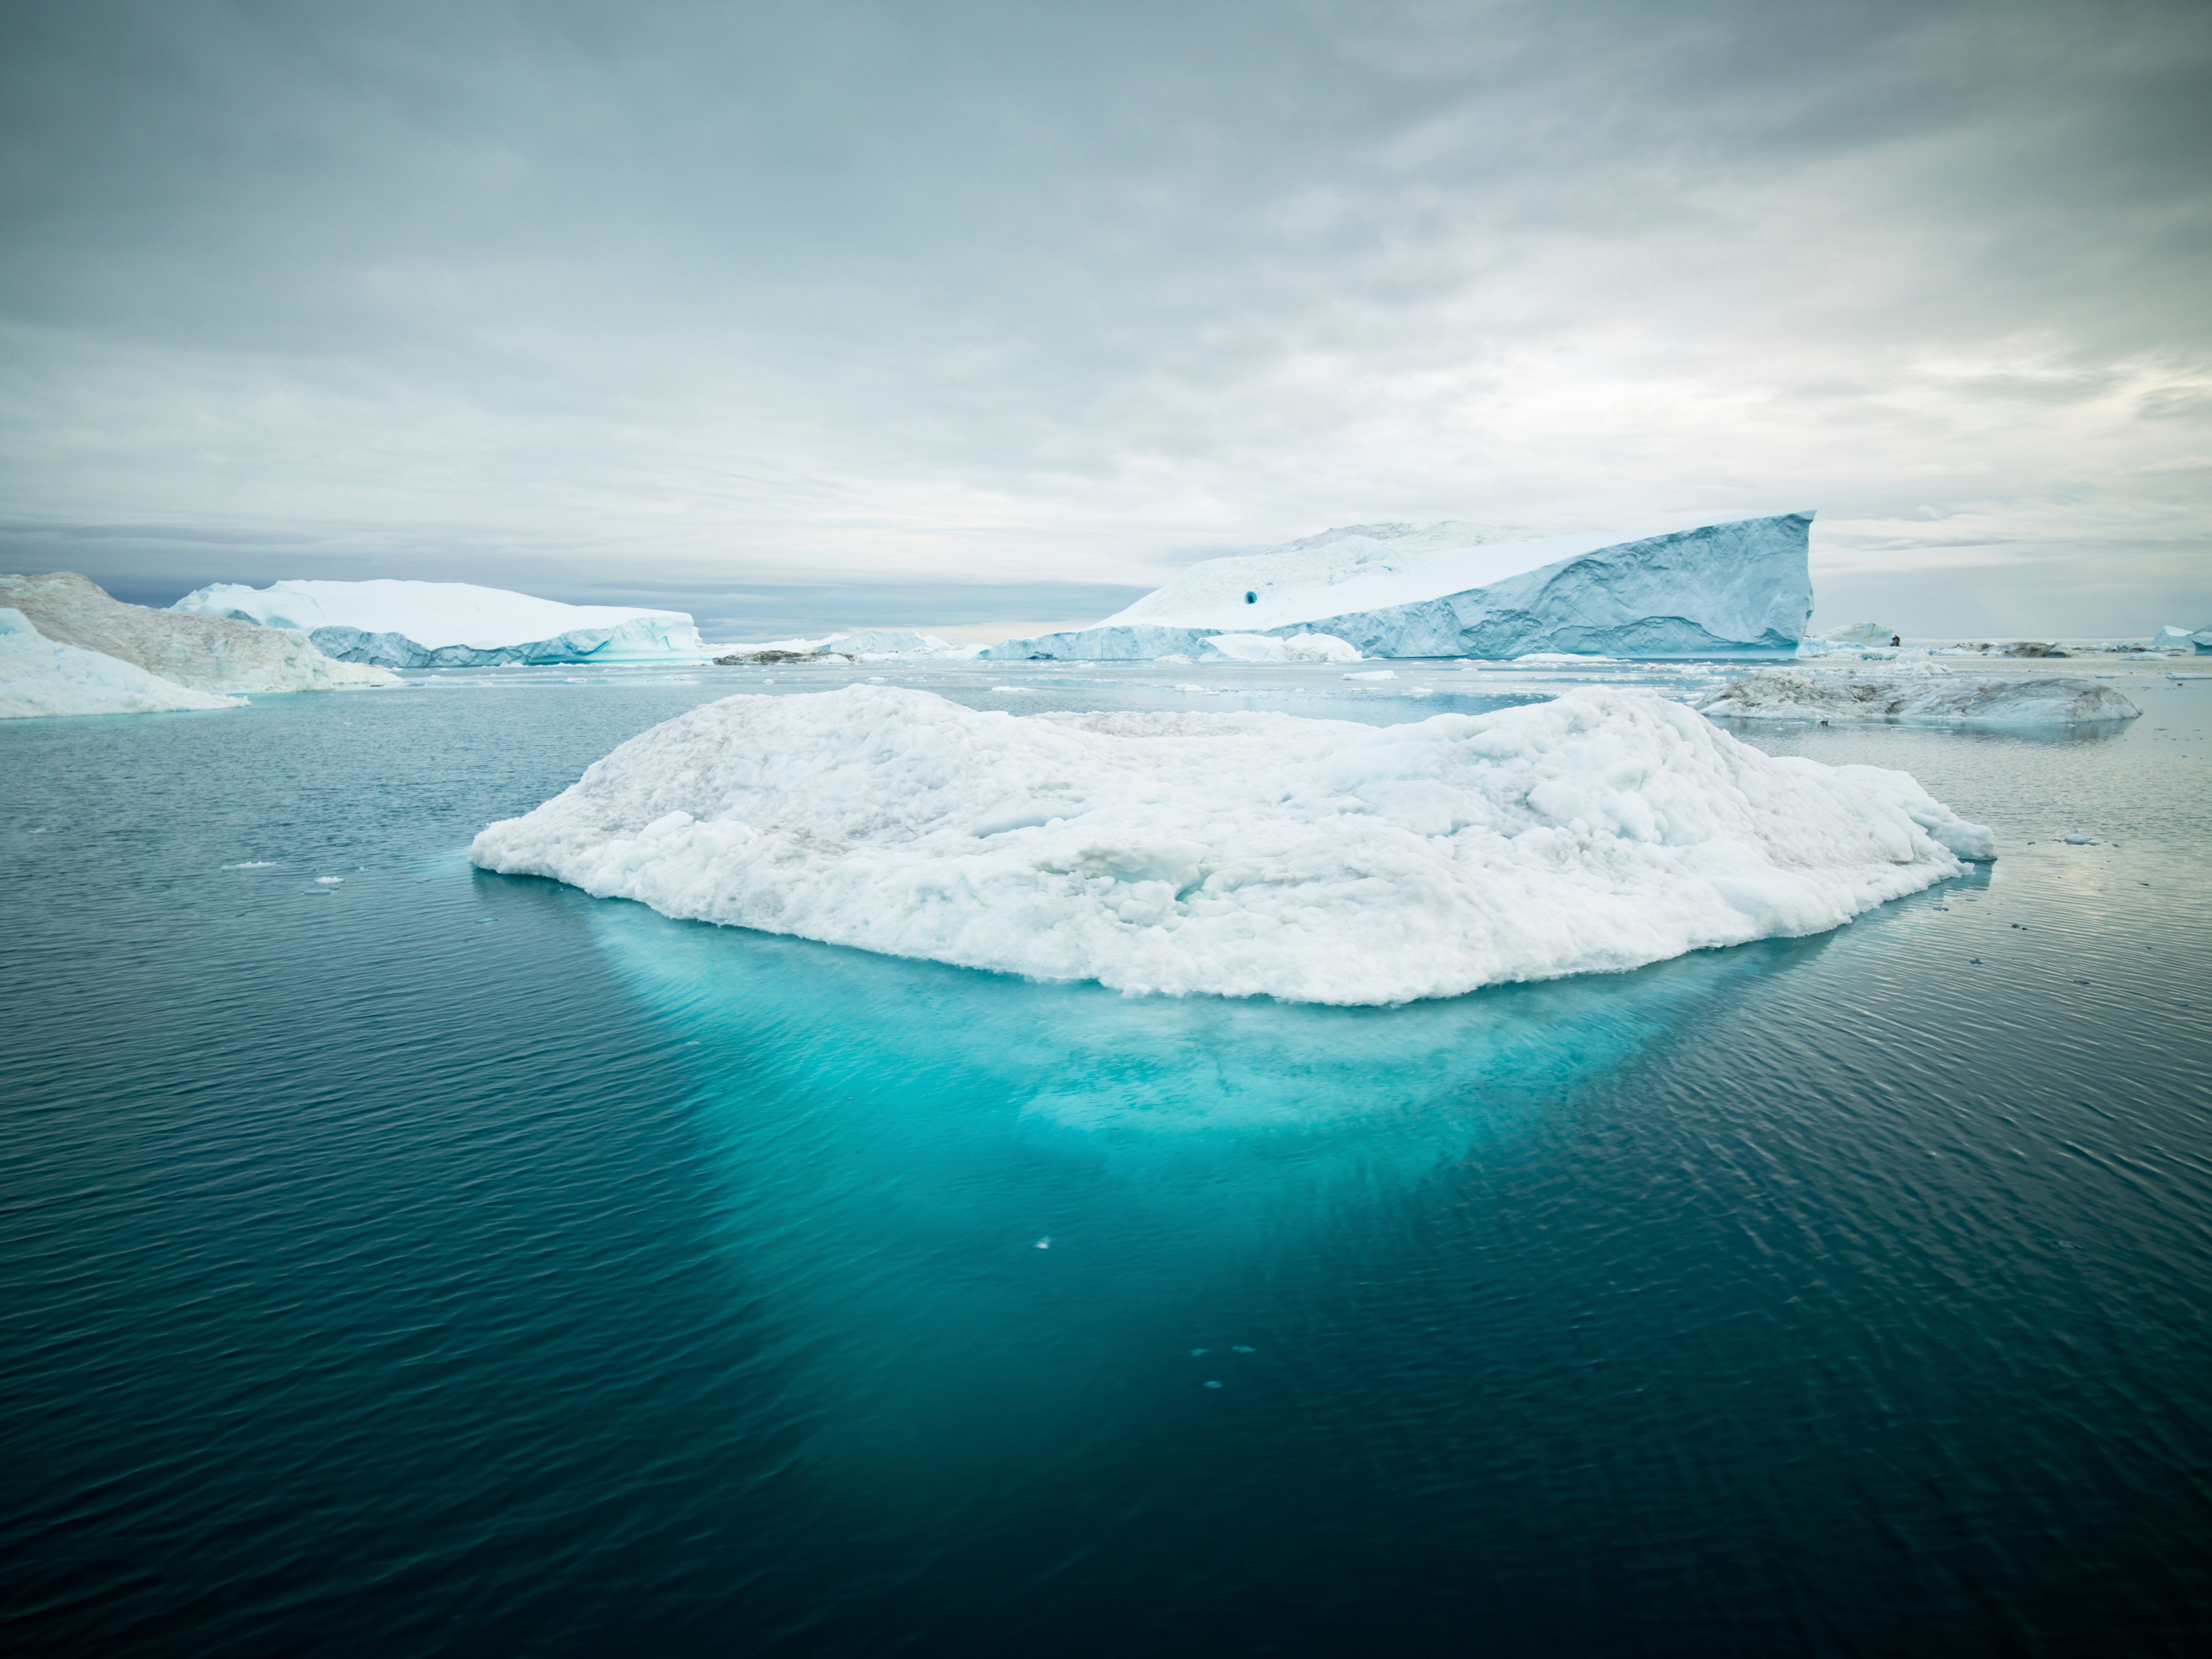 Monitoring global sea level rise using satellite data